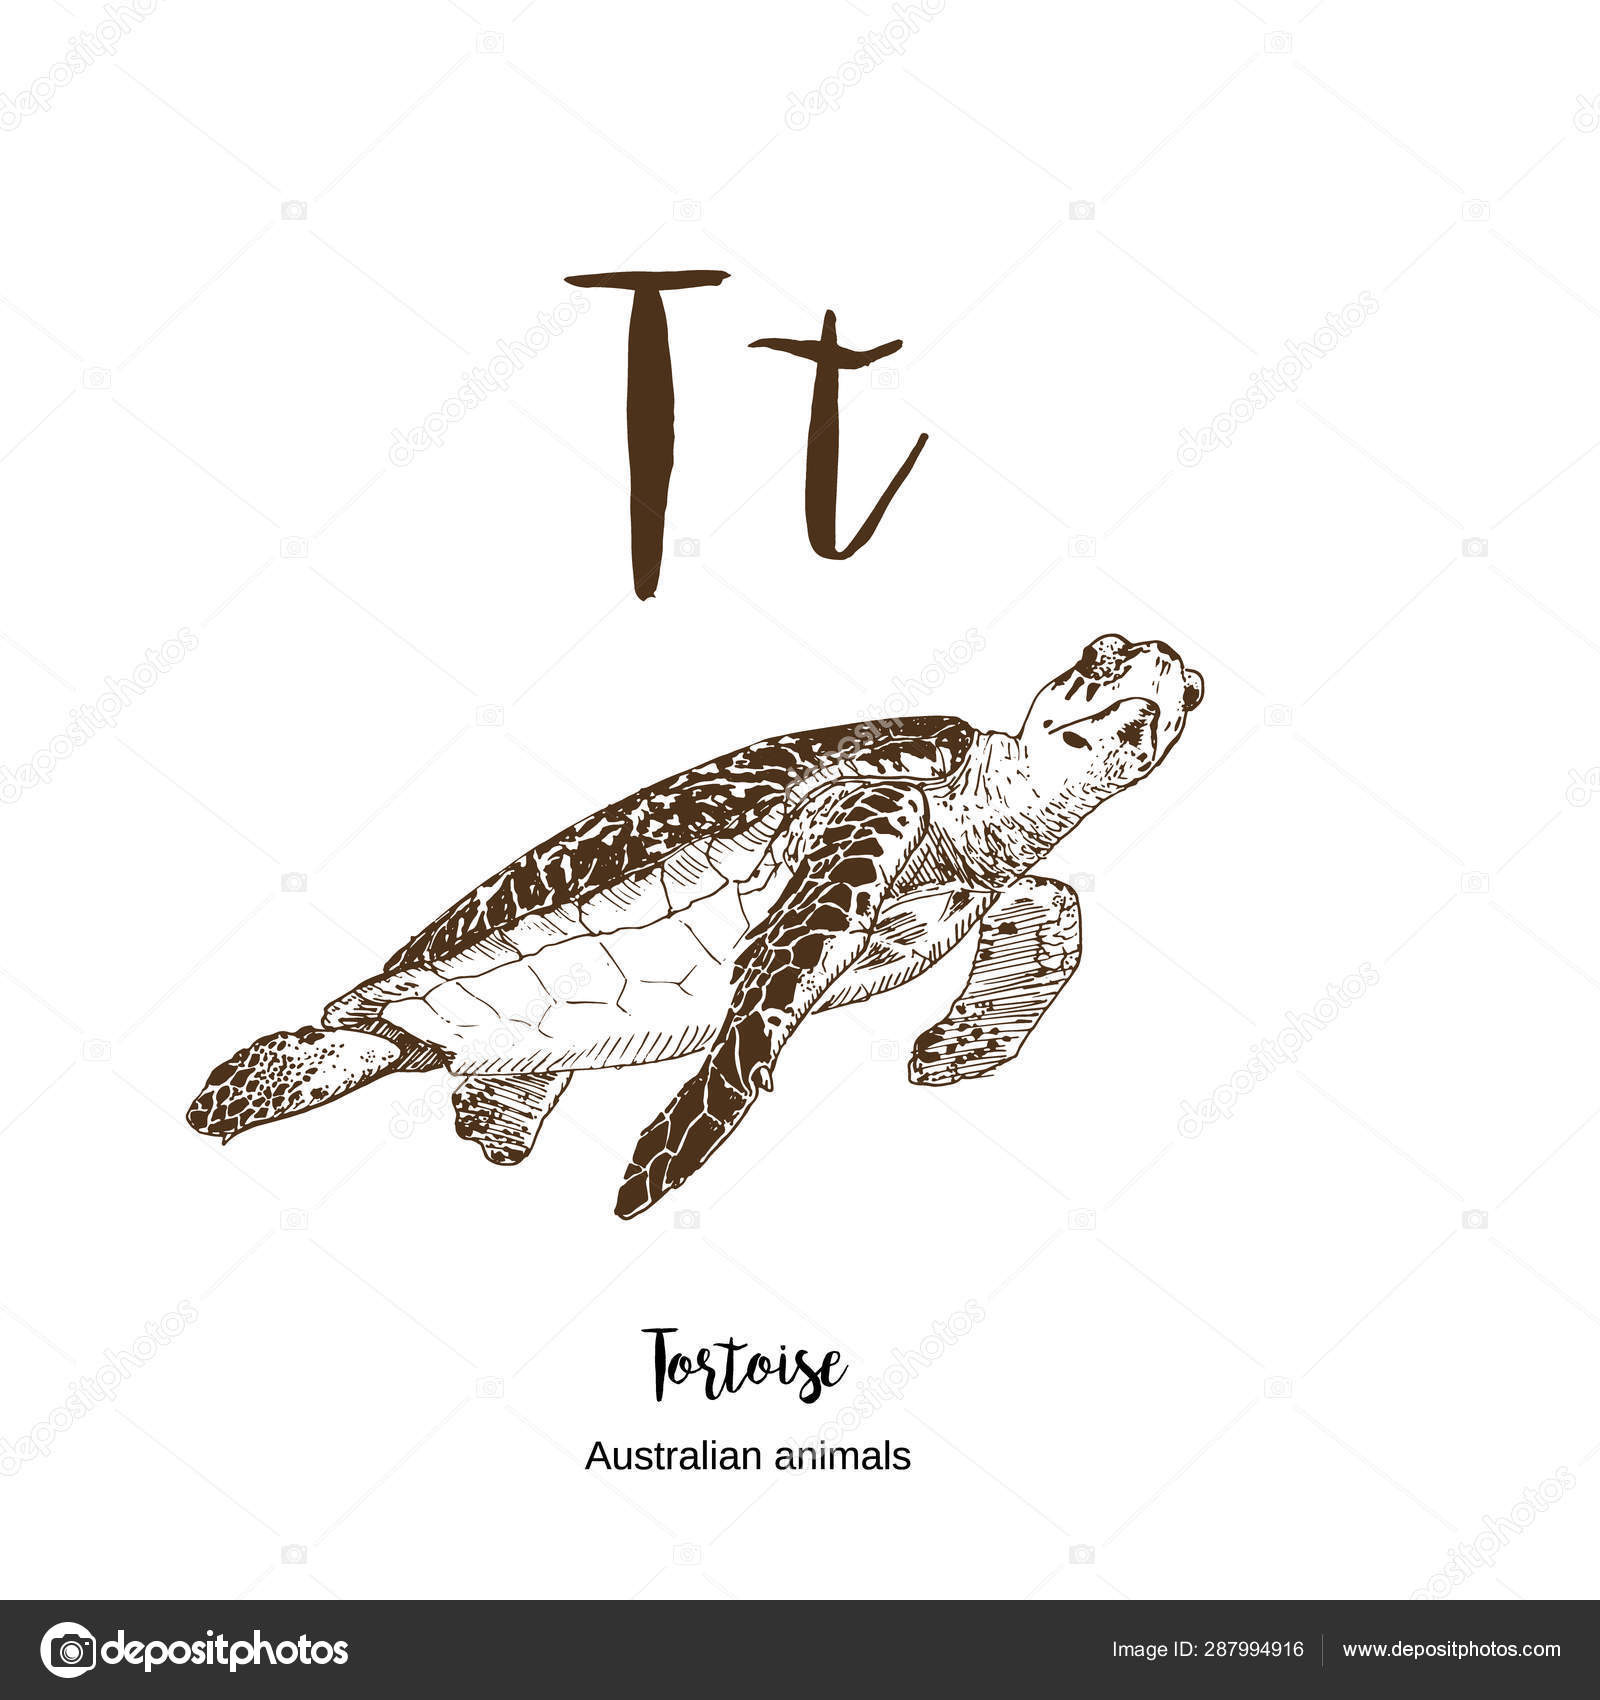 depositphotos stock illustration turtle or tortoise a to